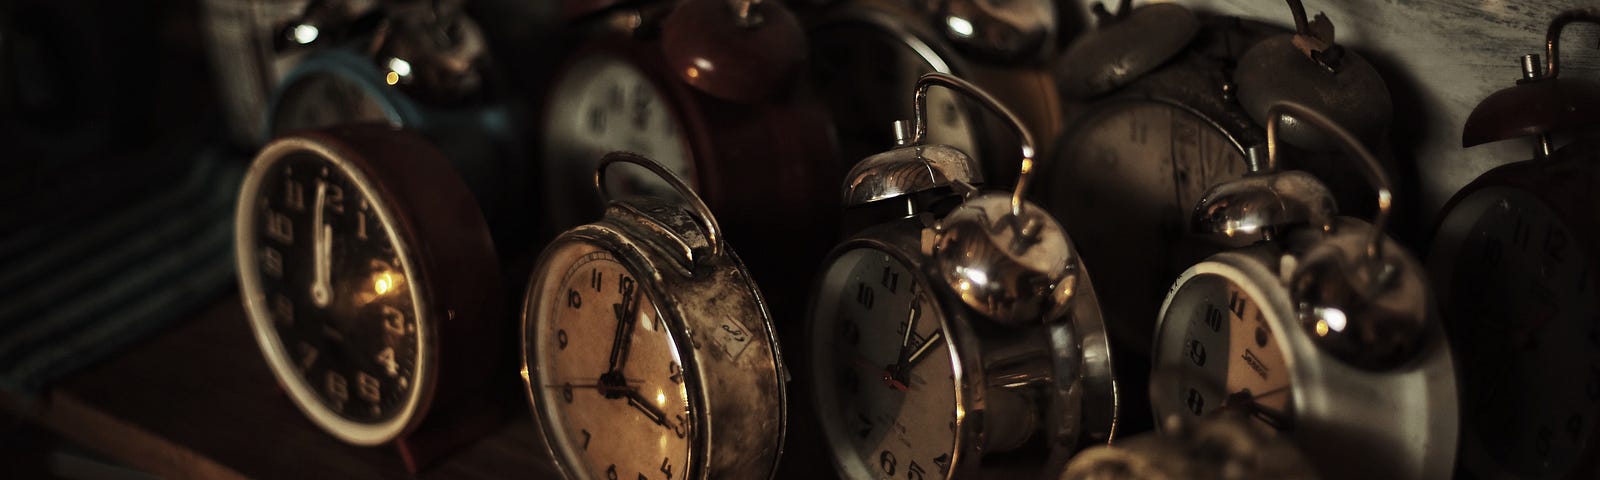 A dark moody photo of a shelf full of alarm clocks.